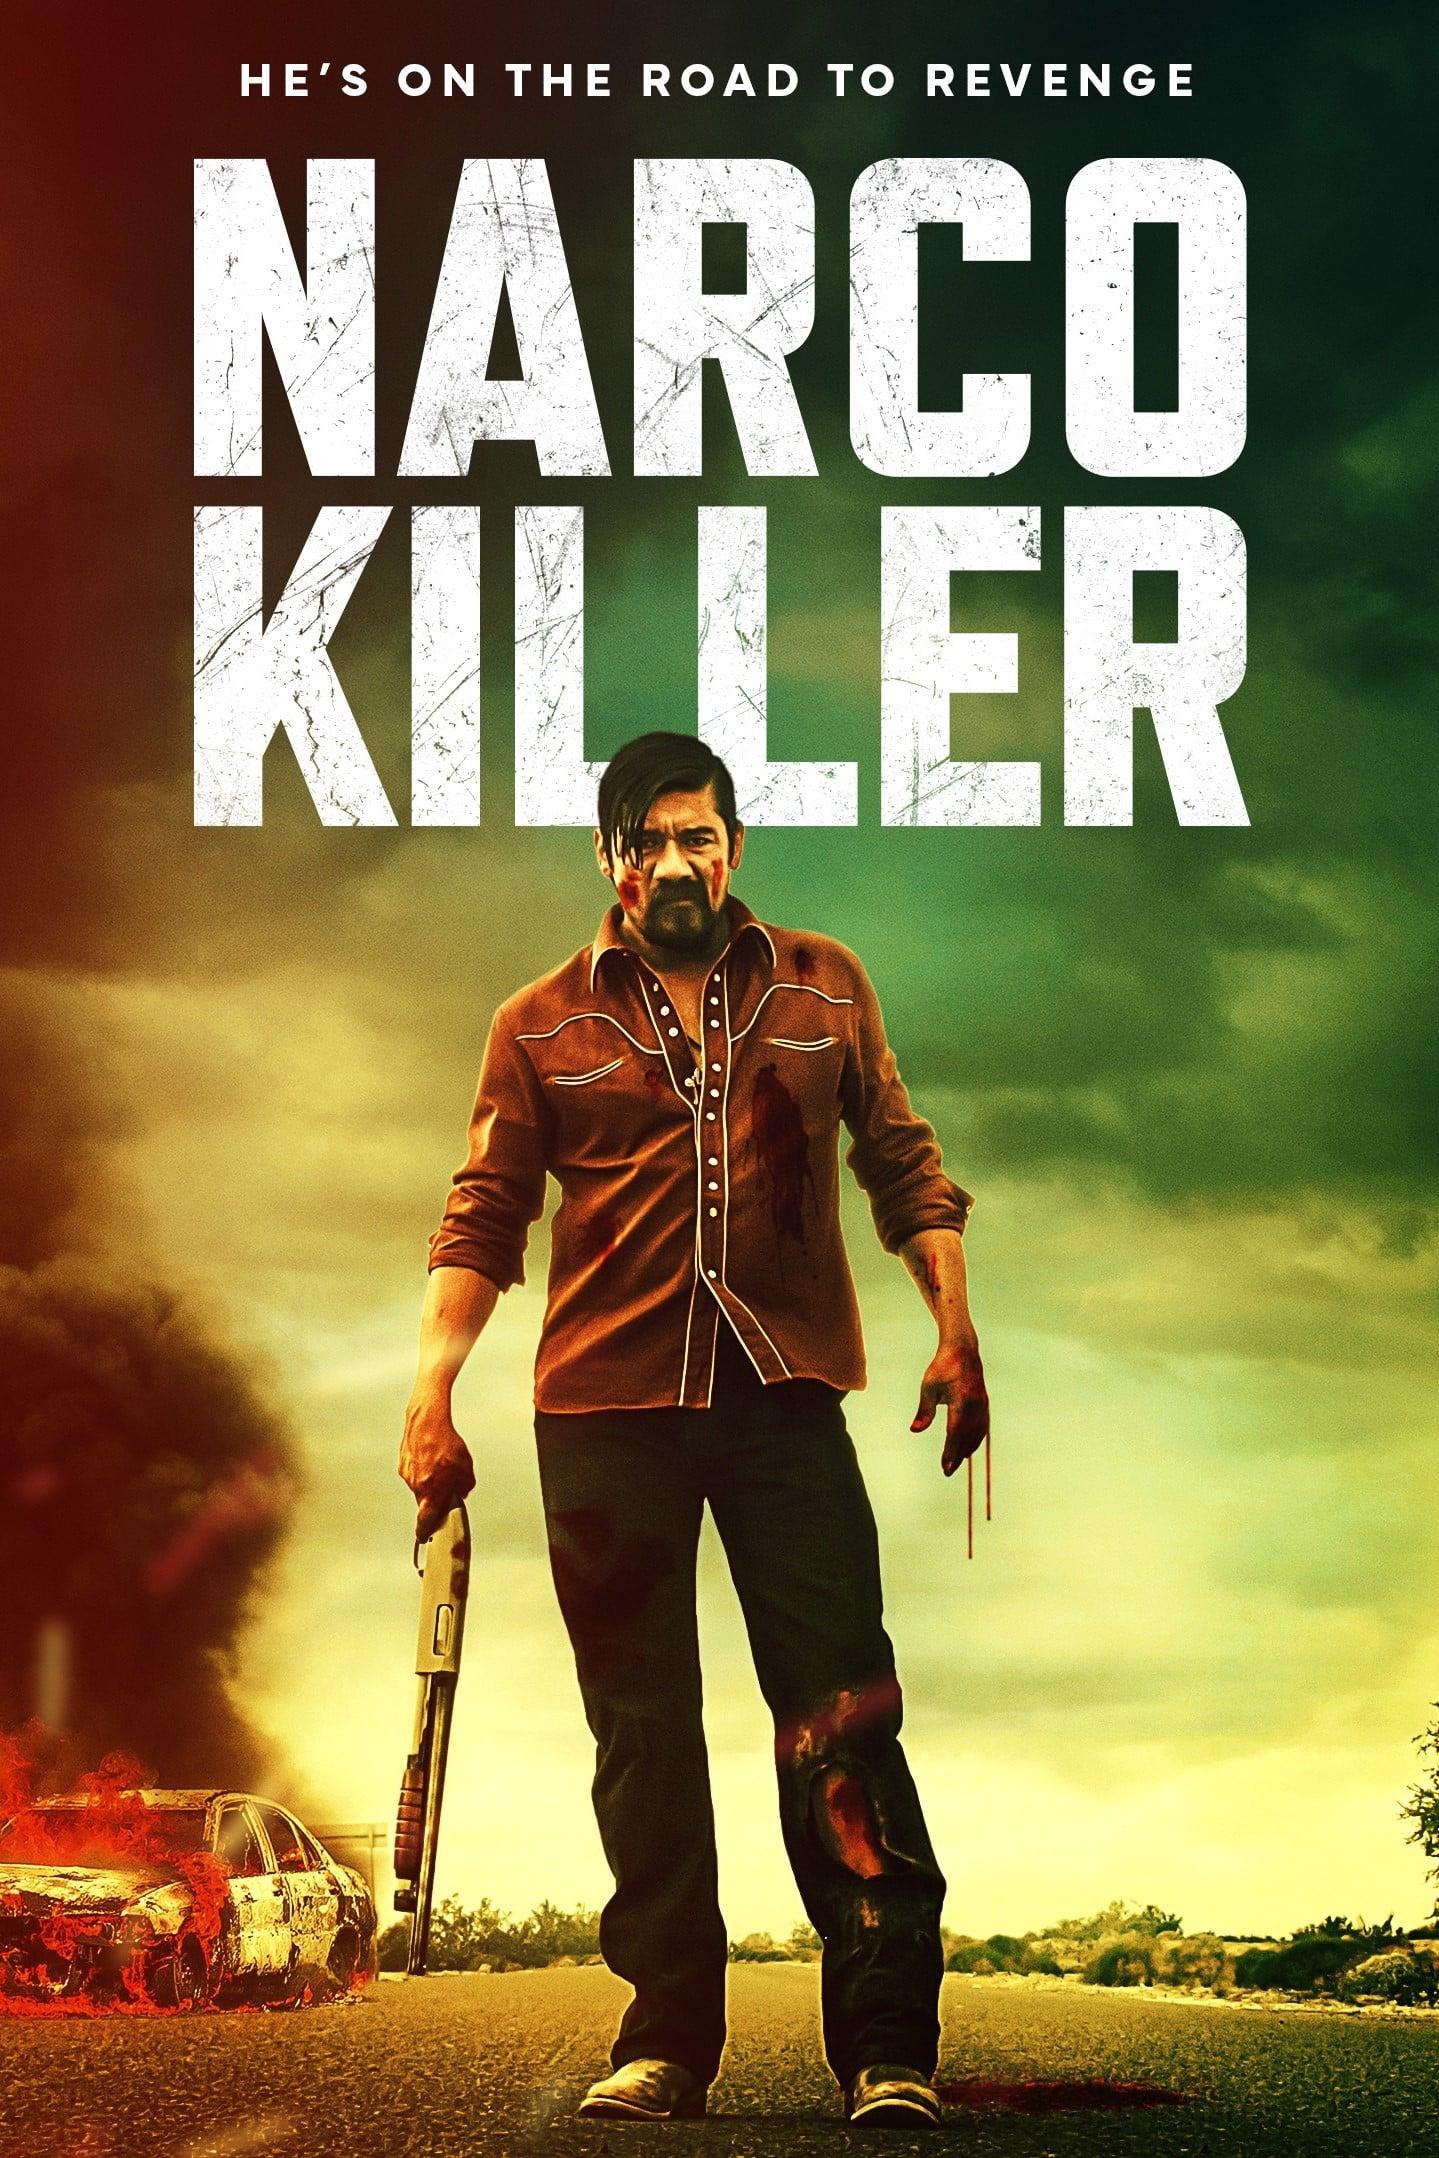 Narco Killer poster